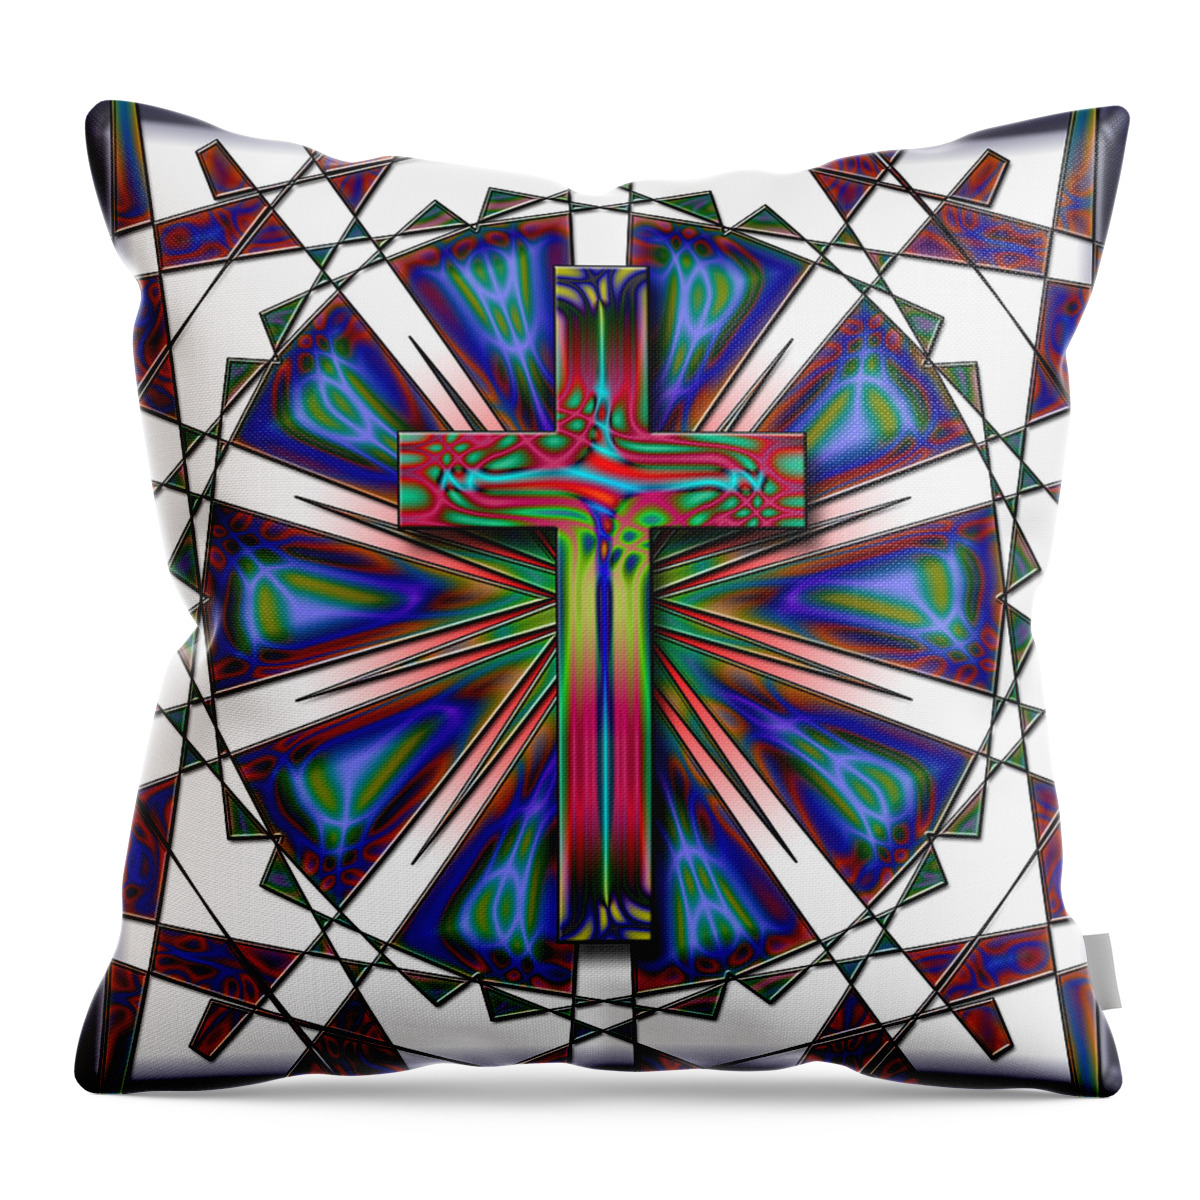  Throw Pillow featuring the digital art Retro Cross by David G Paul